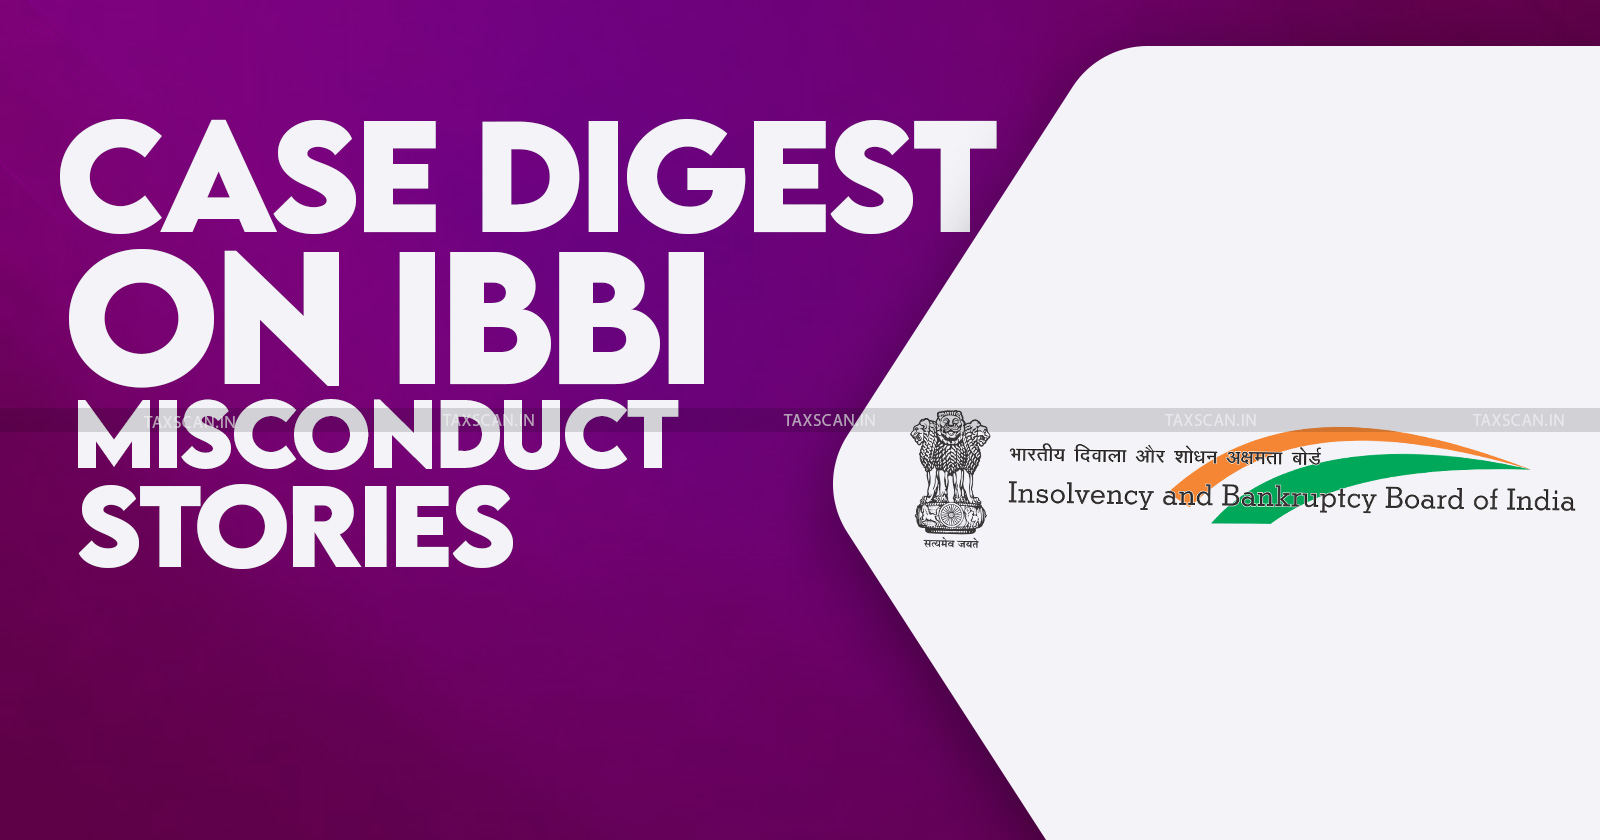 IBBI - IBBI misconduct cases - case digest - IBBI regulatory actions - taxscan